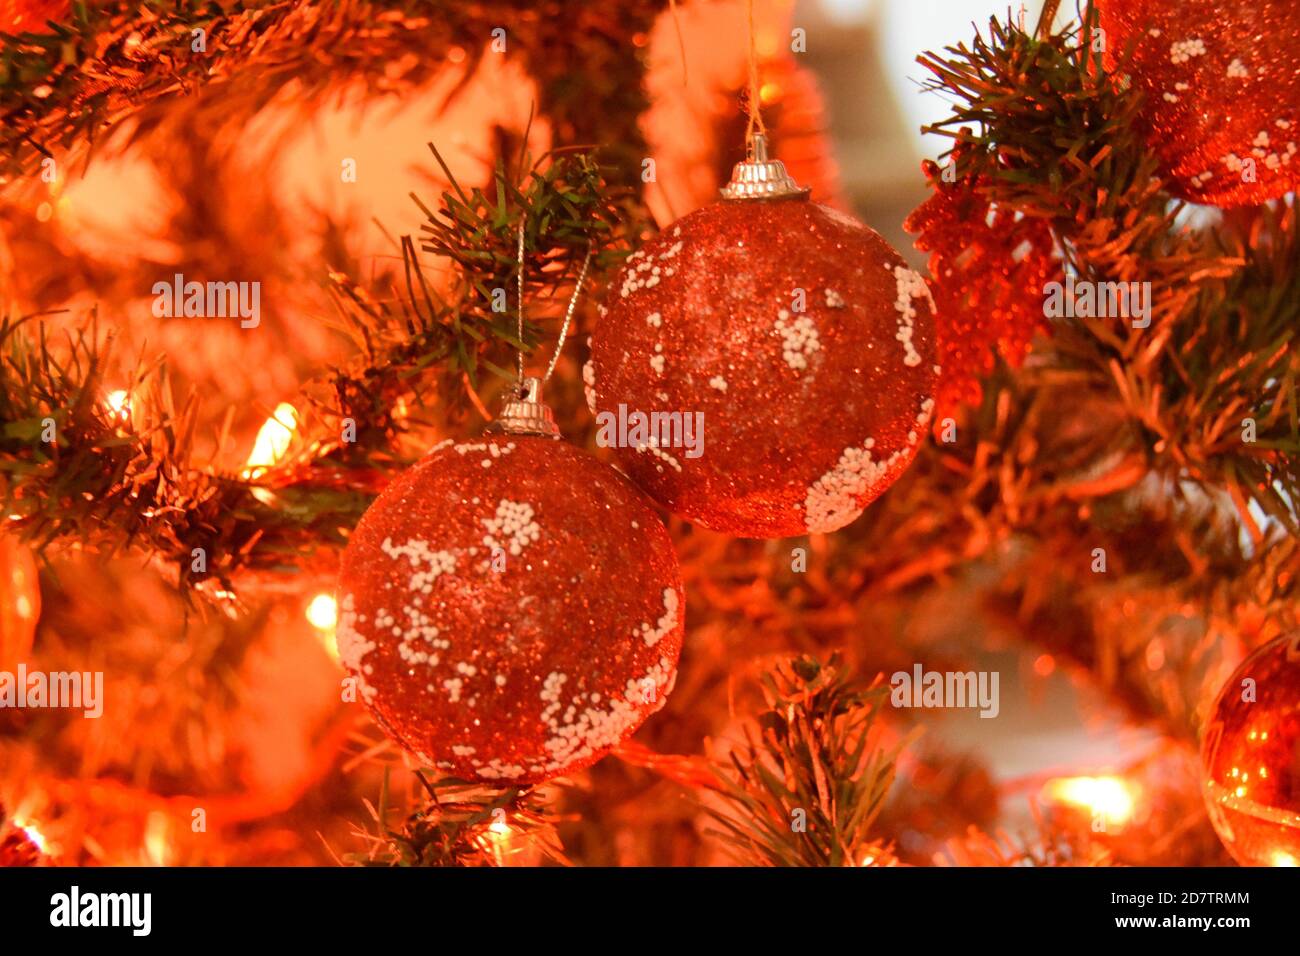 https://c8.alamy.com/comp/2D7TRMM/christmas-tree-and-lights-backgroundclose-up-detail-defocused-view-2D7TRMM.jpg